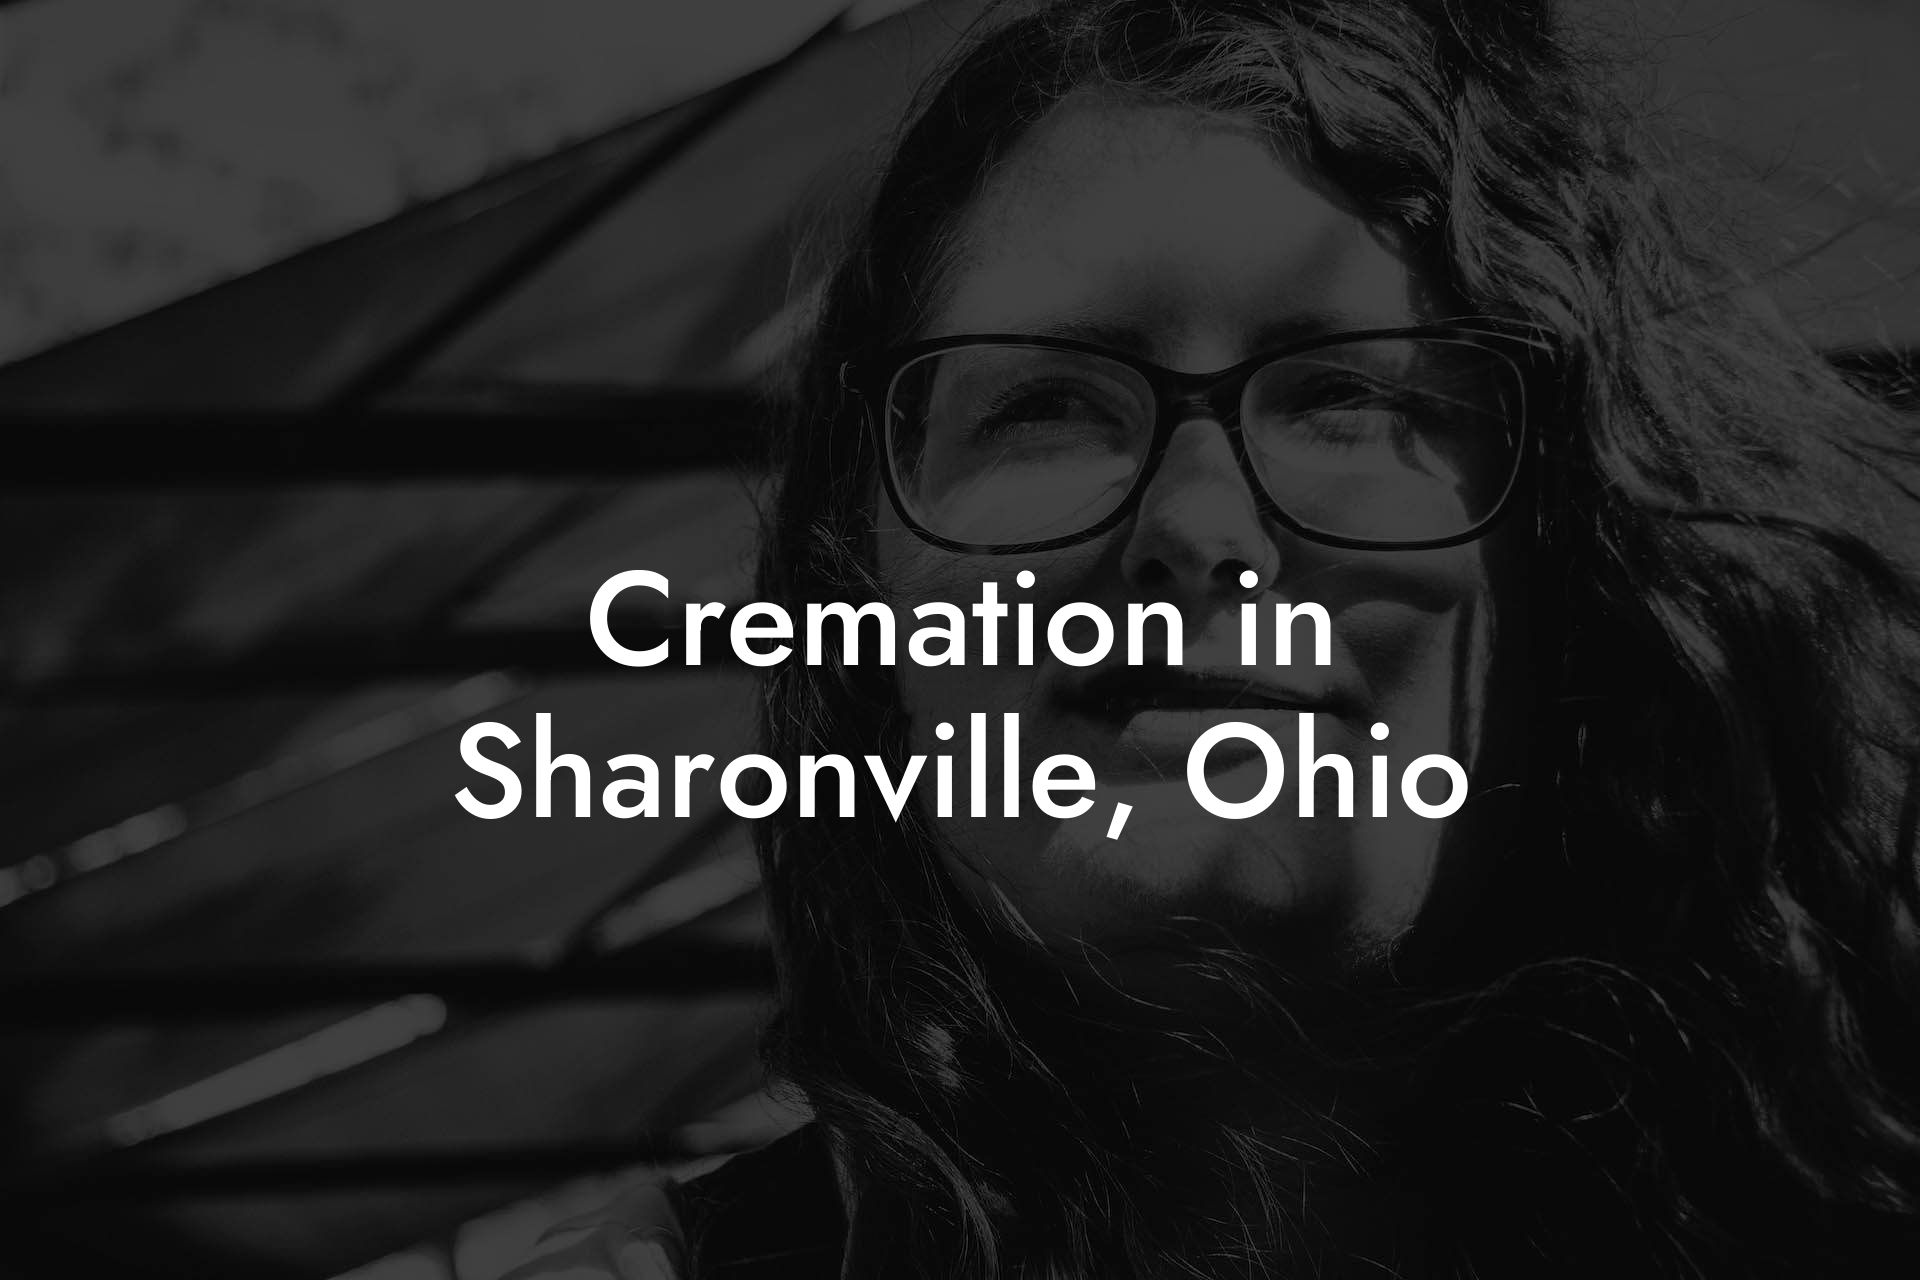 Cremation in Sharonville, Ohio